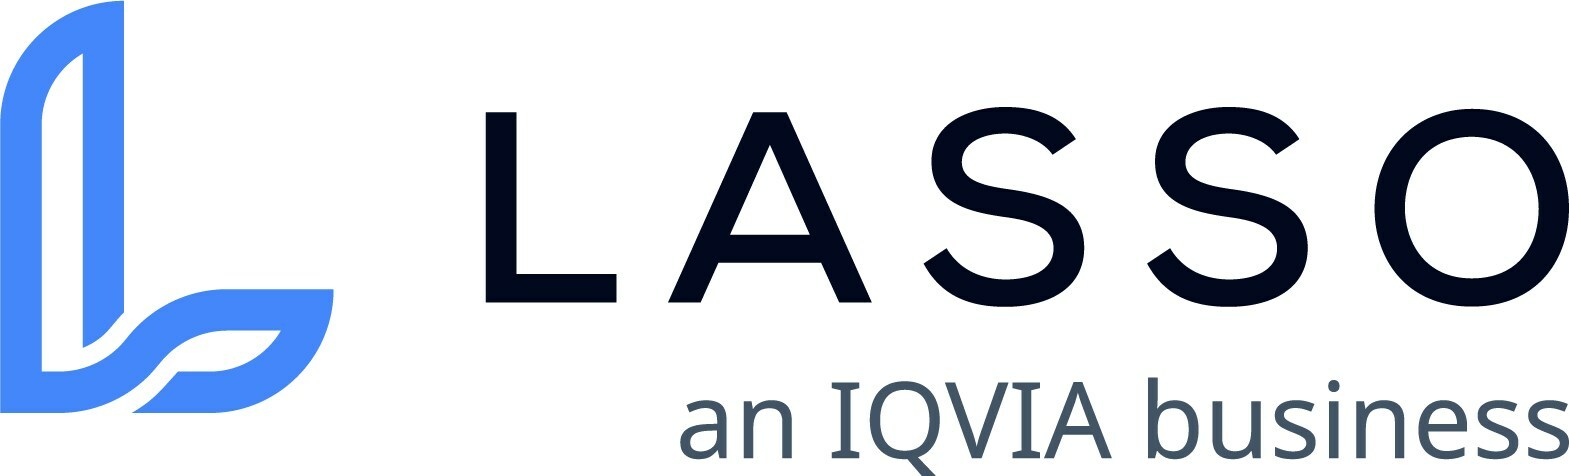 Lasso, an IQVIA business